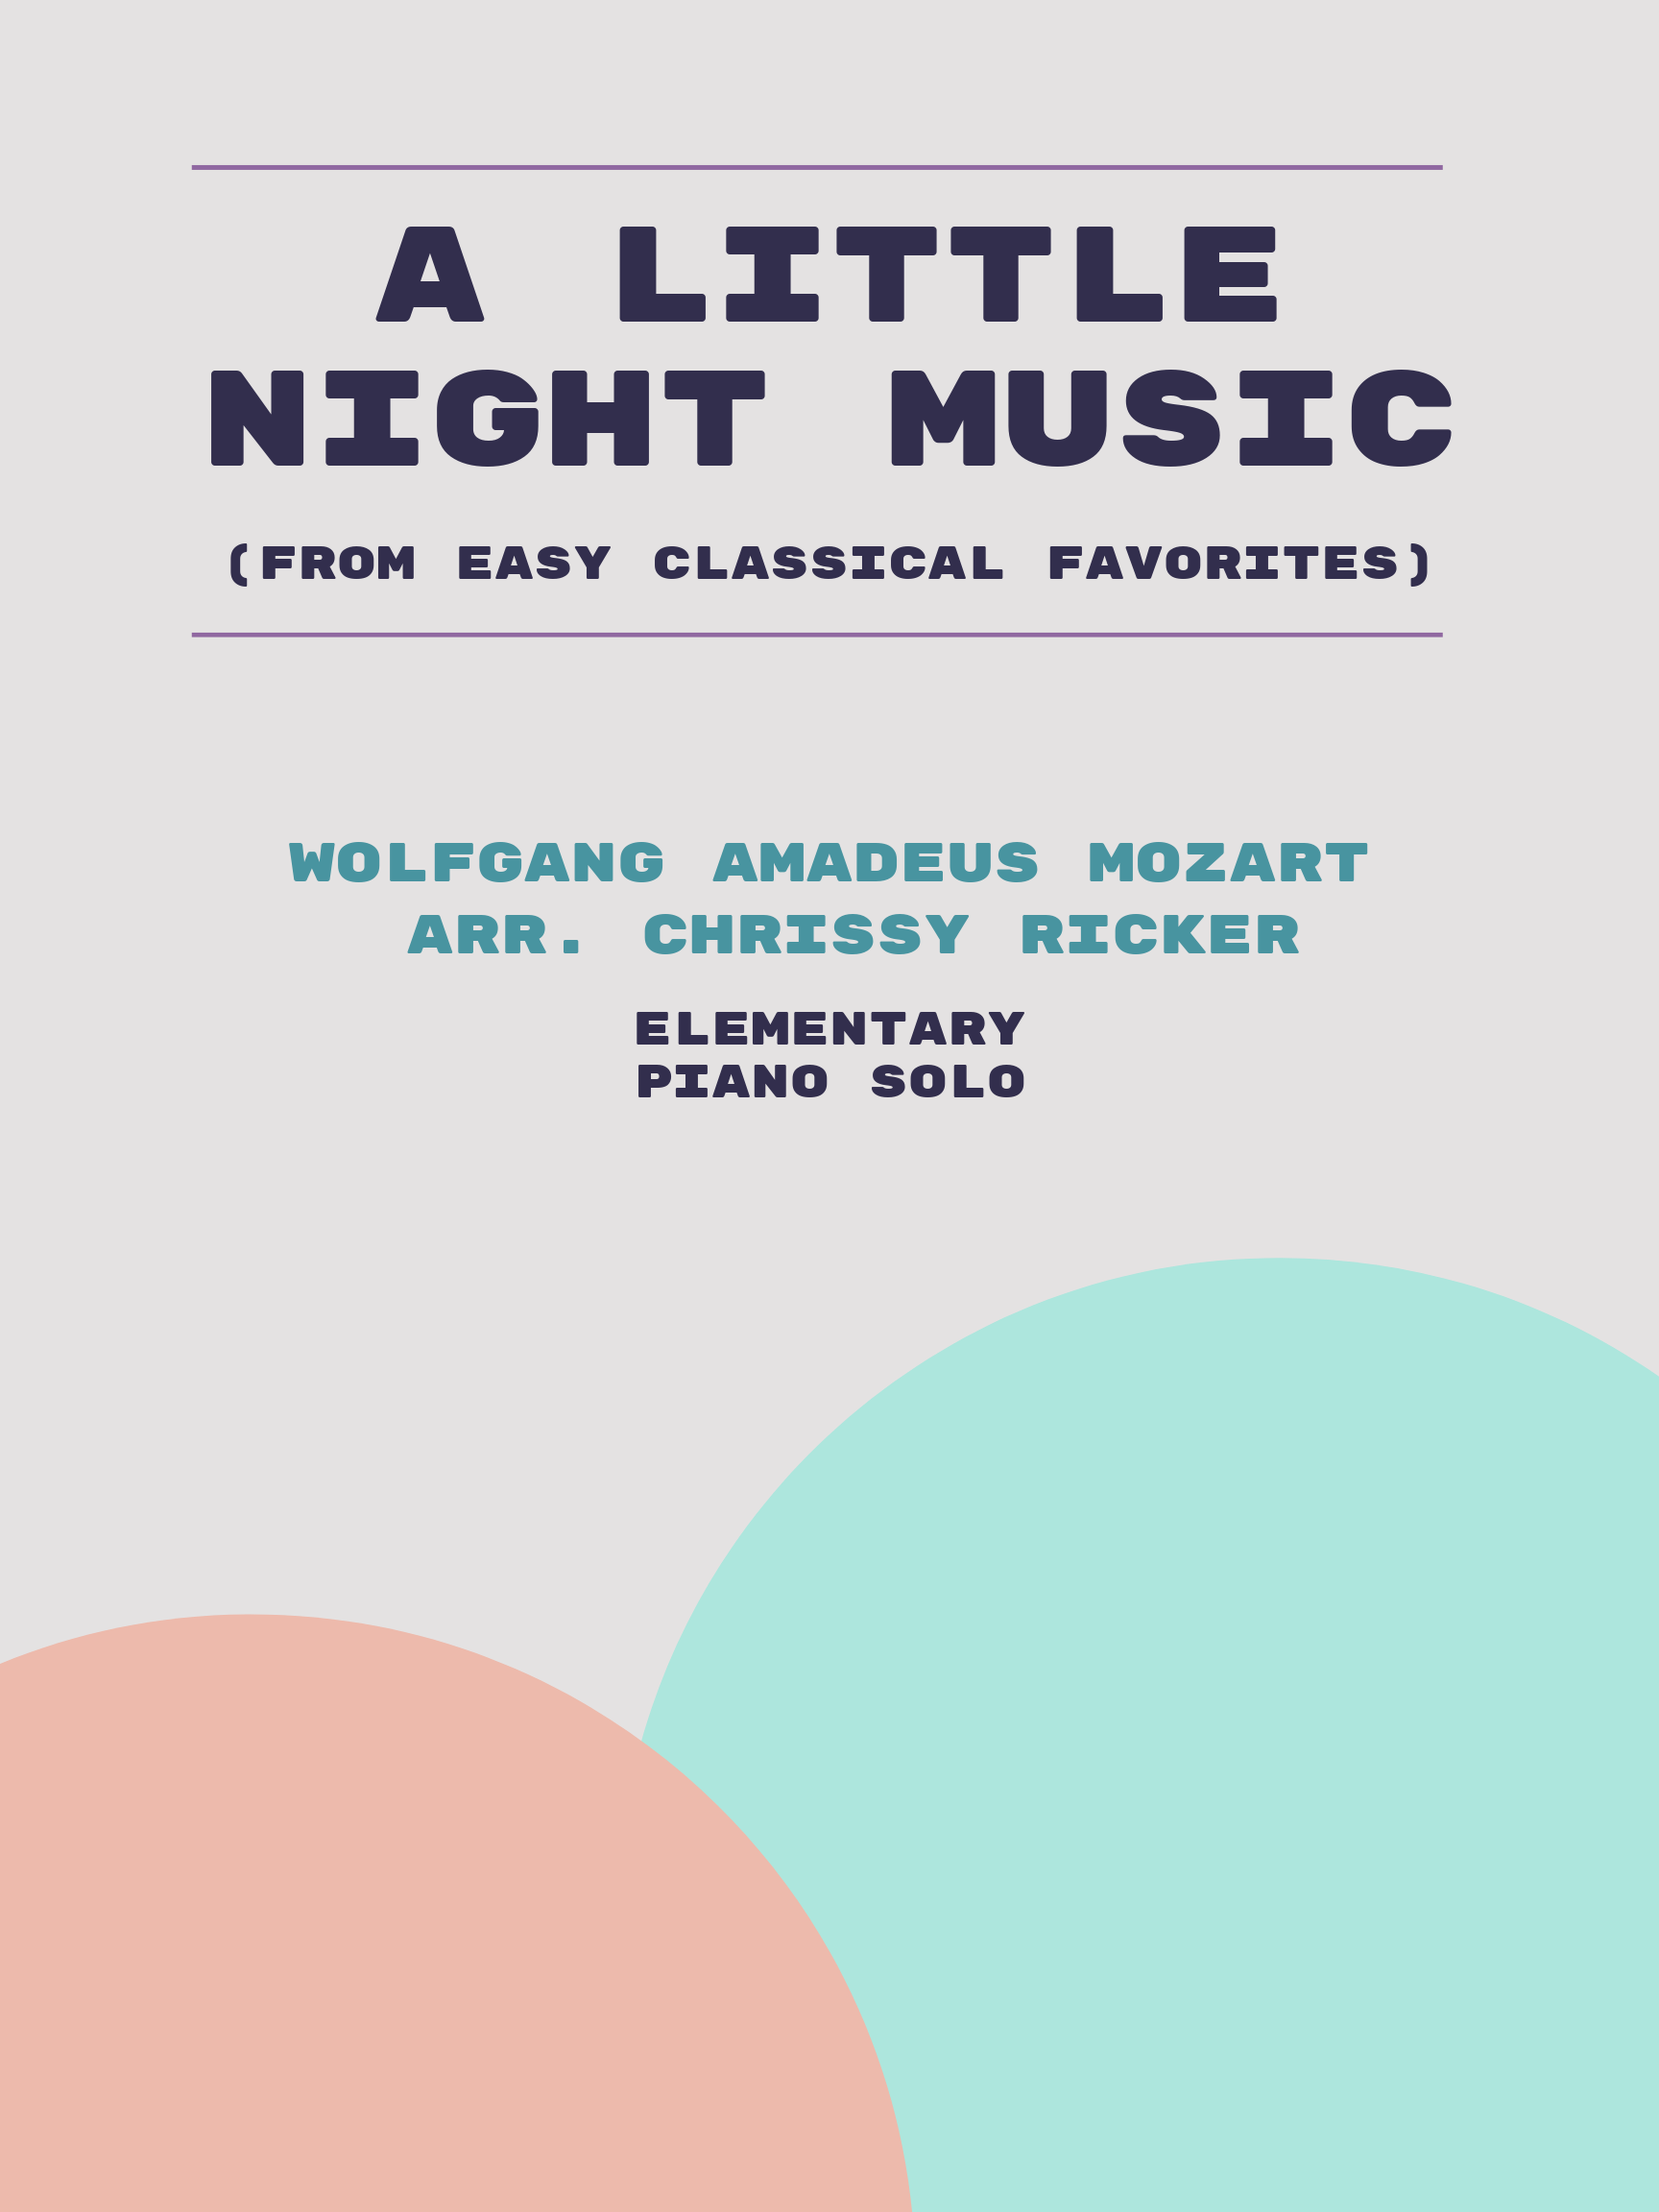 A Little Night Music by Wolfgang Amadeus Mozart